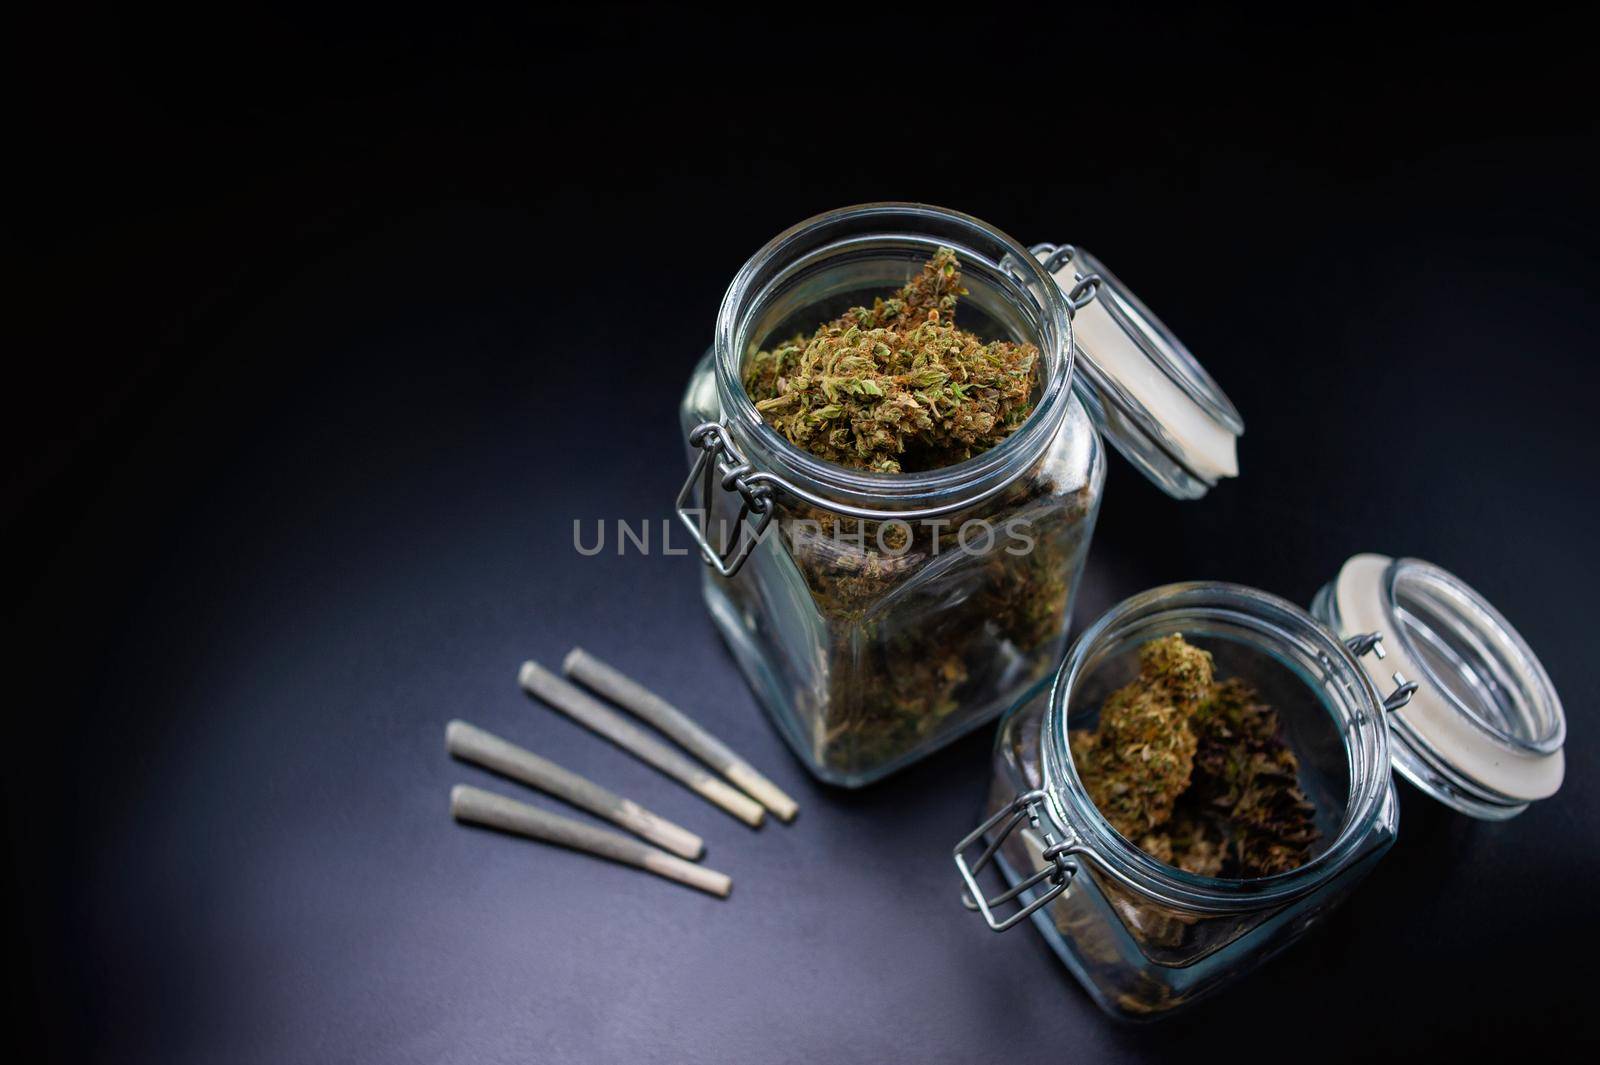 Dry marijuana in a jar and jambs by Rotozey